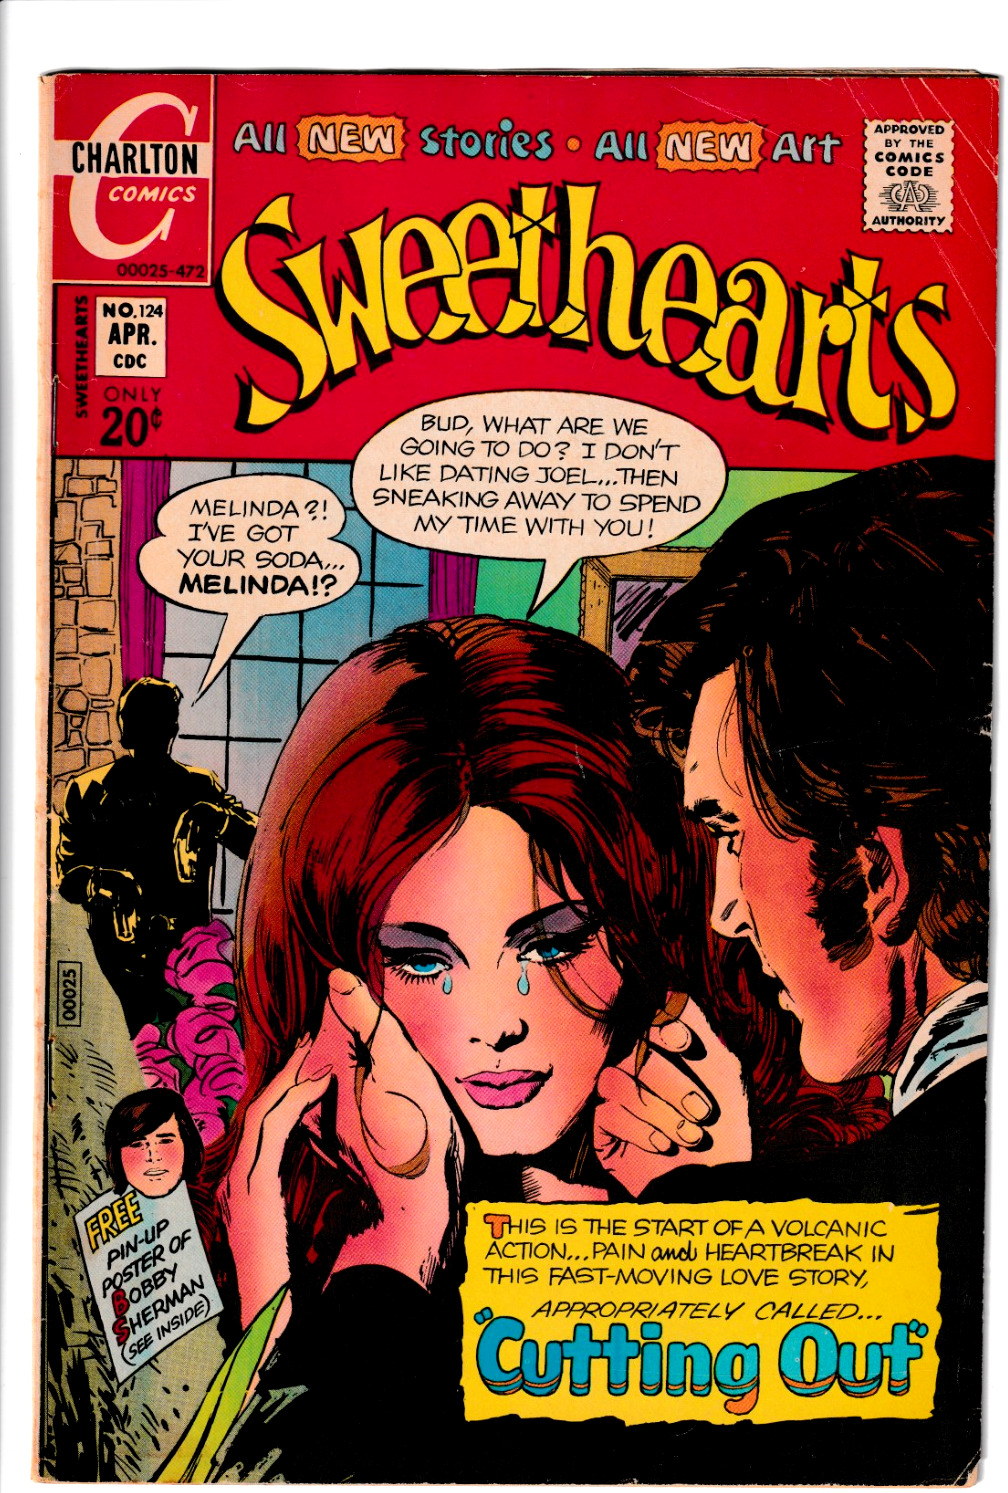 SWEETHEARTS 1972 CHARLTON COMICS #124 AMAZING LOVE STORY COMIC EST 5.0-5.5 C36